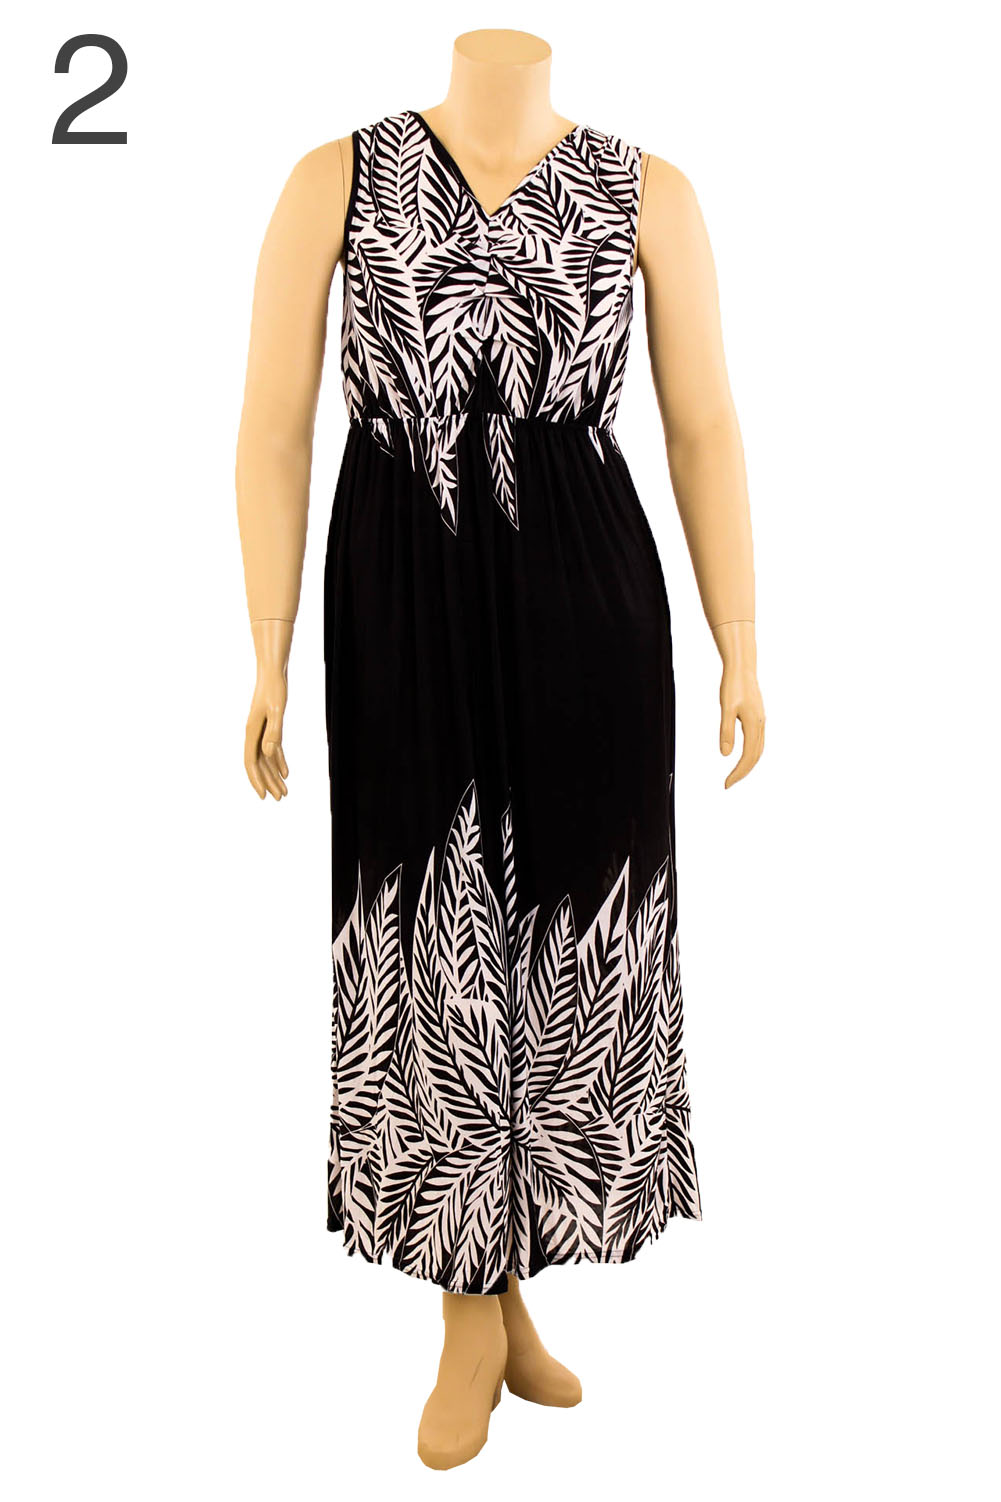 Womens Plus Size Printed Dress Long Maxi Sundress Boho Summer Smocked ...